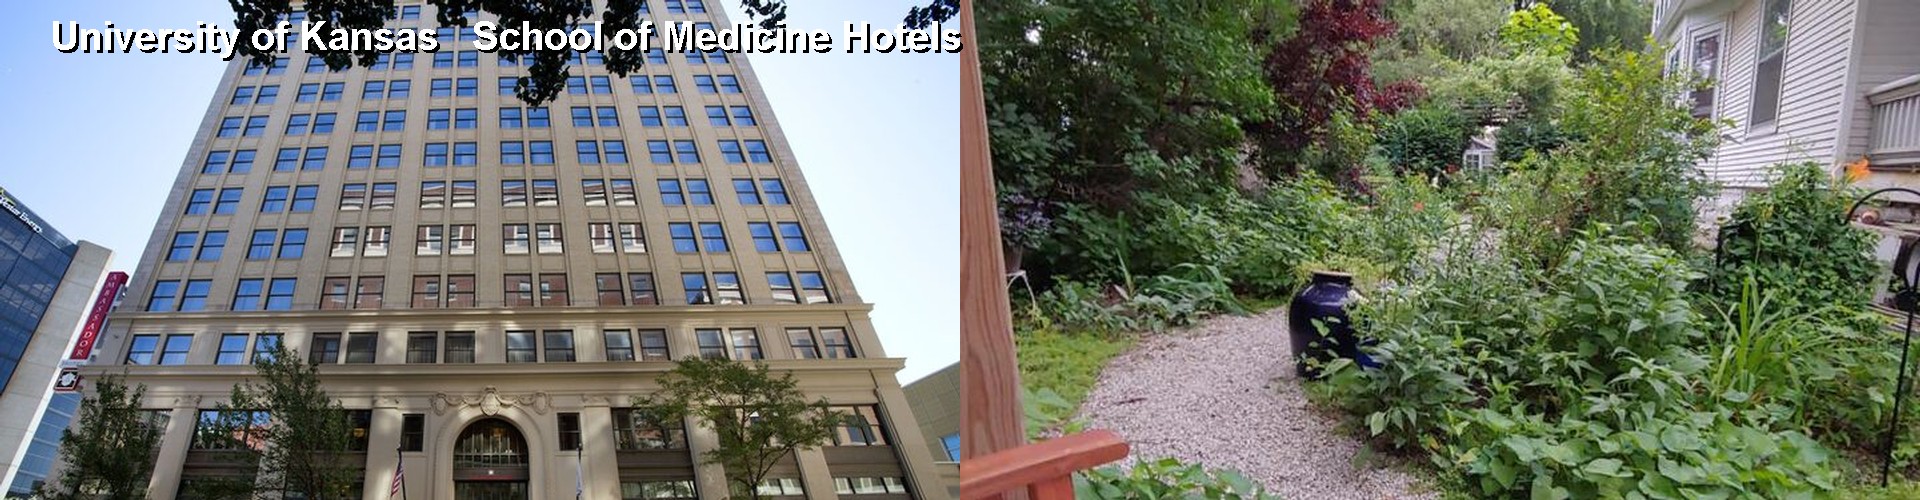 5 Best Hotels near University of Kansas   School of Medicine